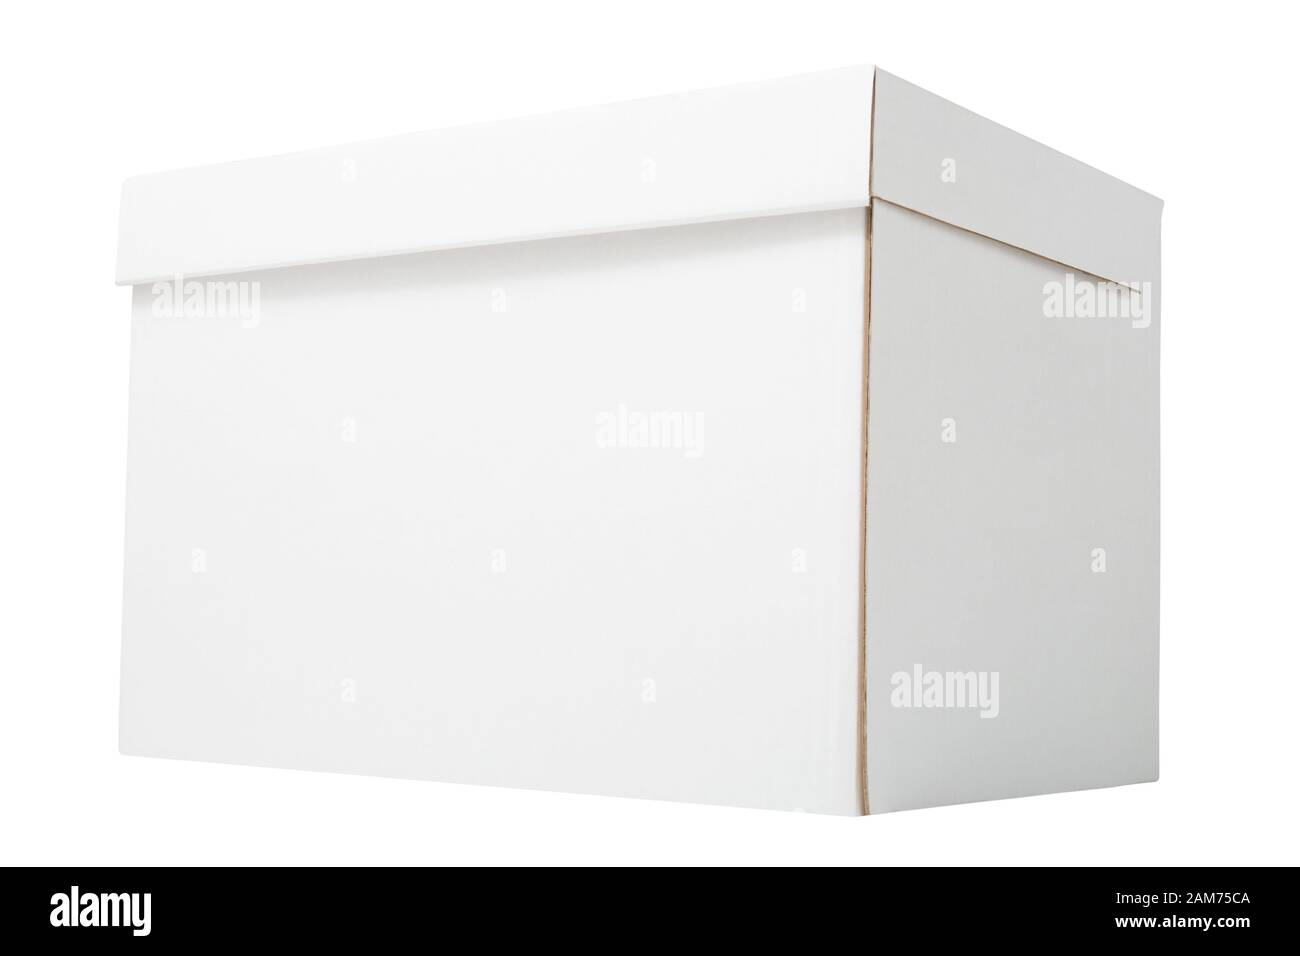 White archive cardboard box isolated on white background. White corrugated  carton box Stock Photo by ©Dmitry.Zimin 331410938